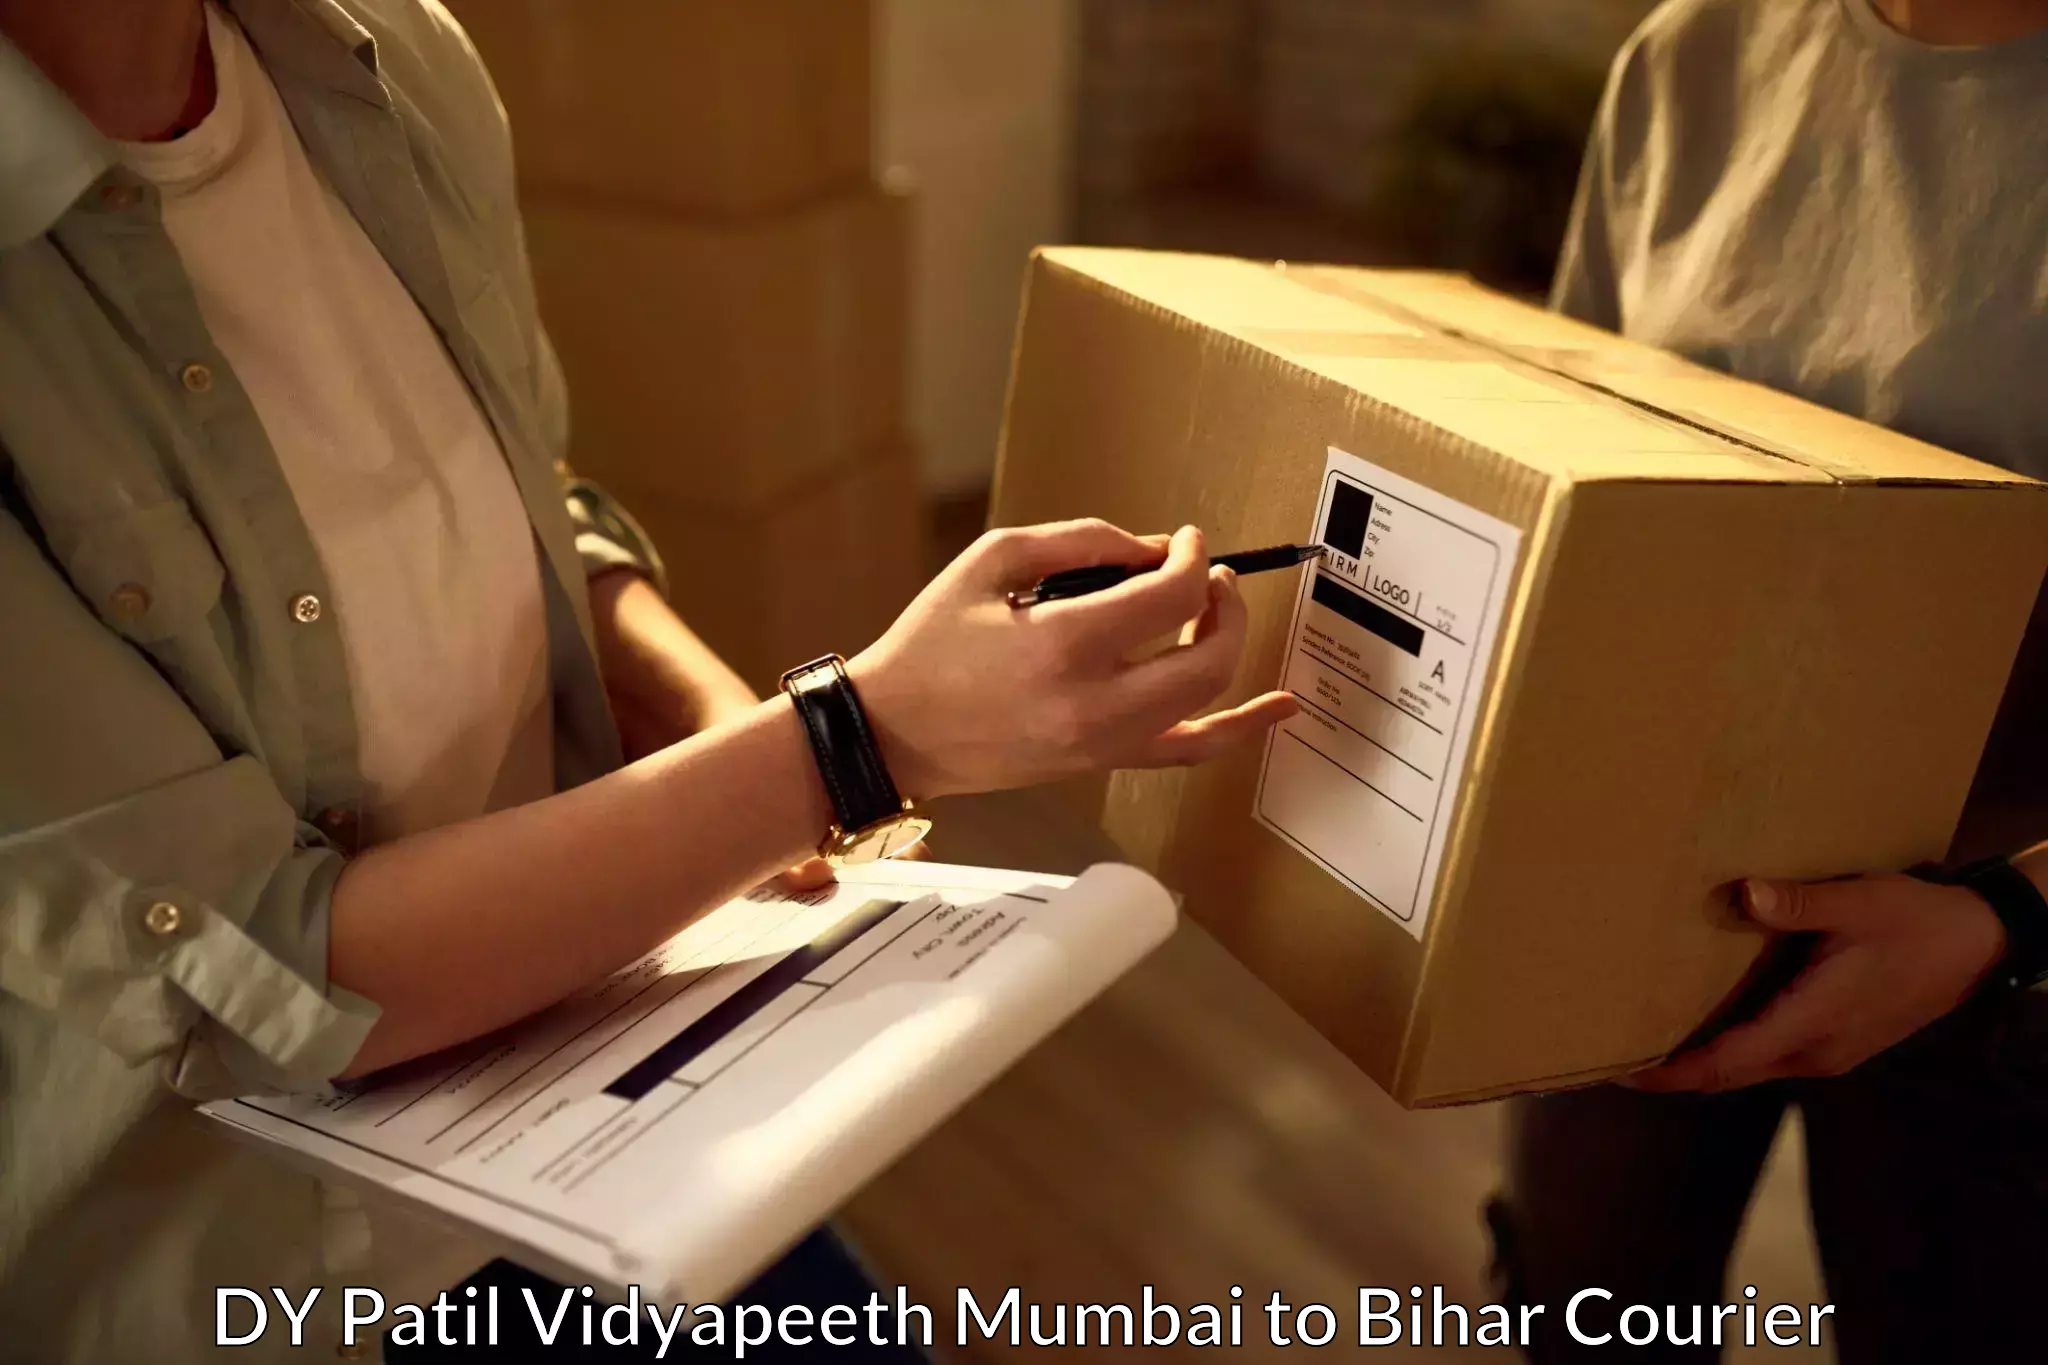 Urban courier service DY Patil Vidyapeeth Mumbai to Bihar